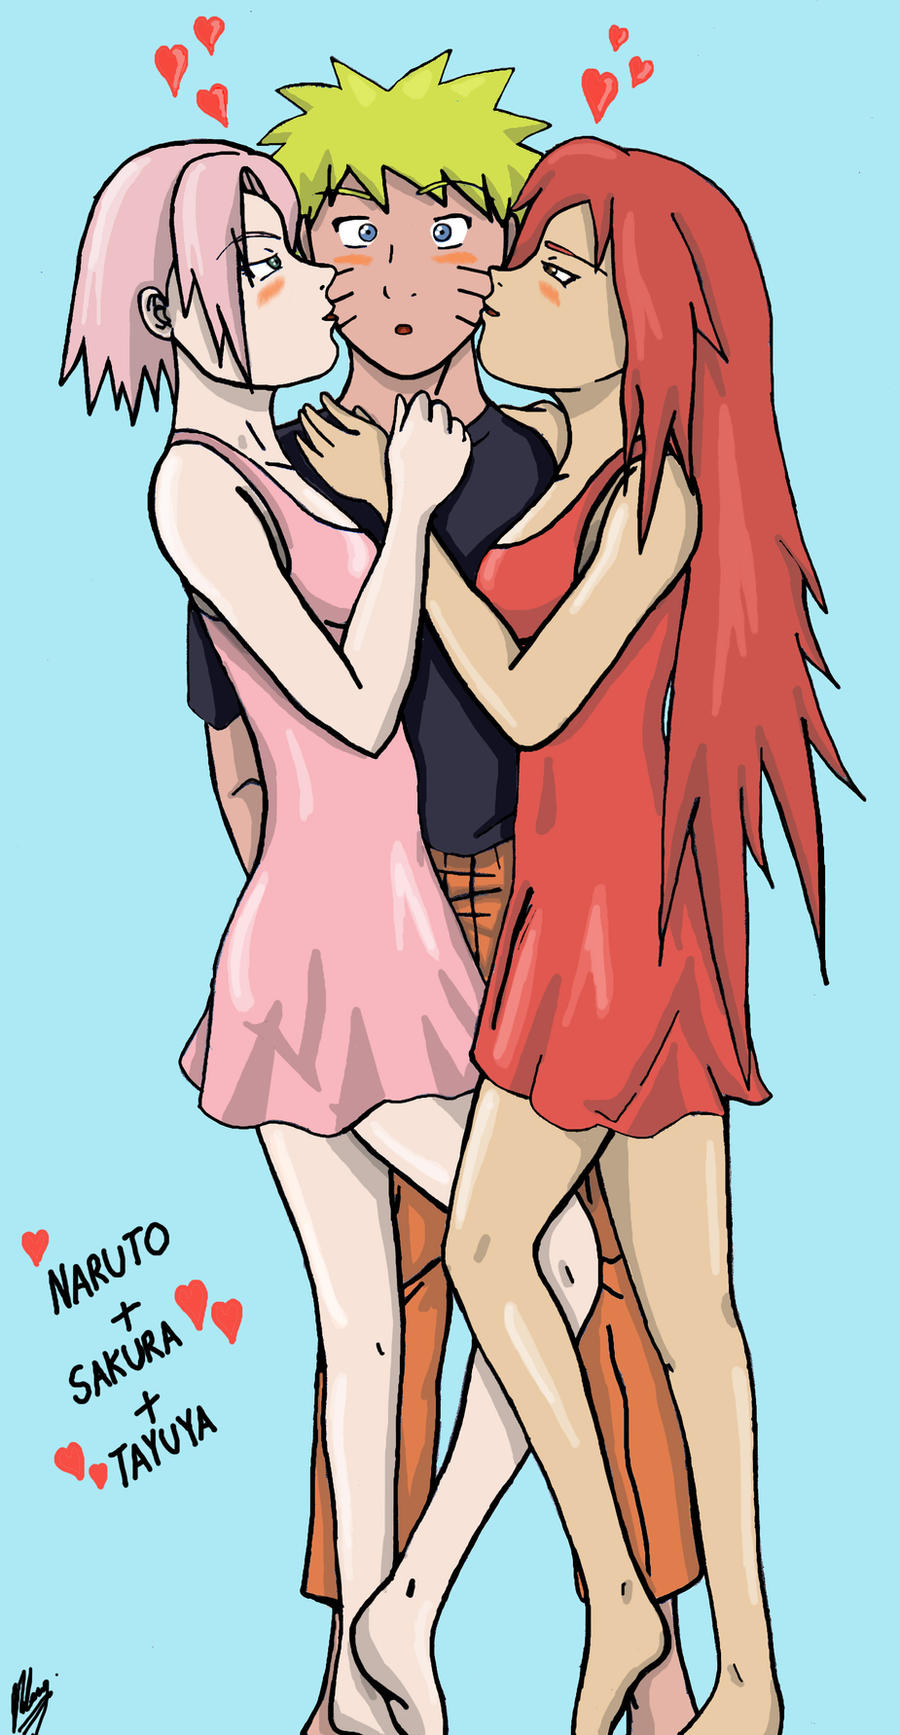 Naruto Sakura And Tayuya By AlphaDelta1001 On DeviantArt.